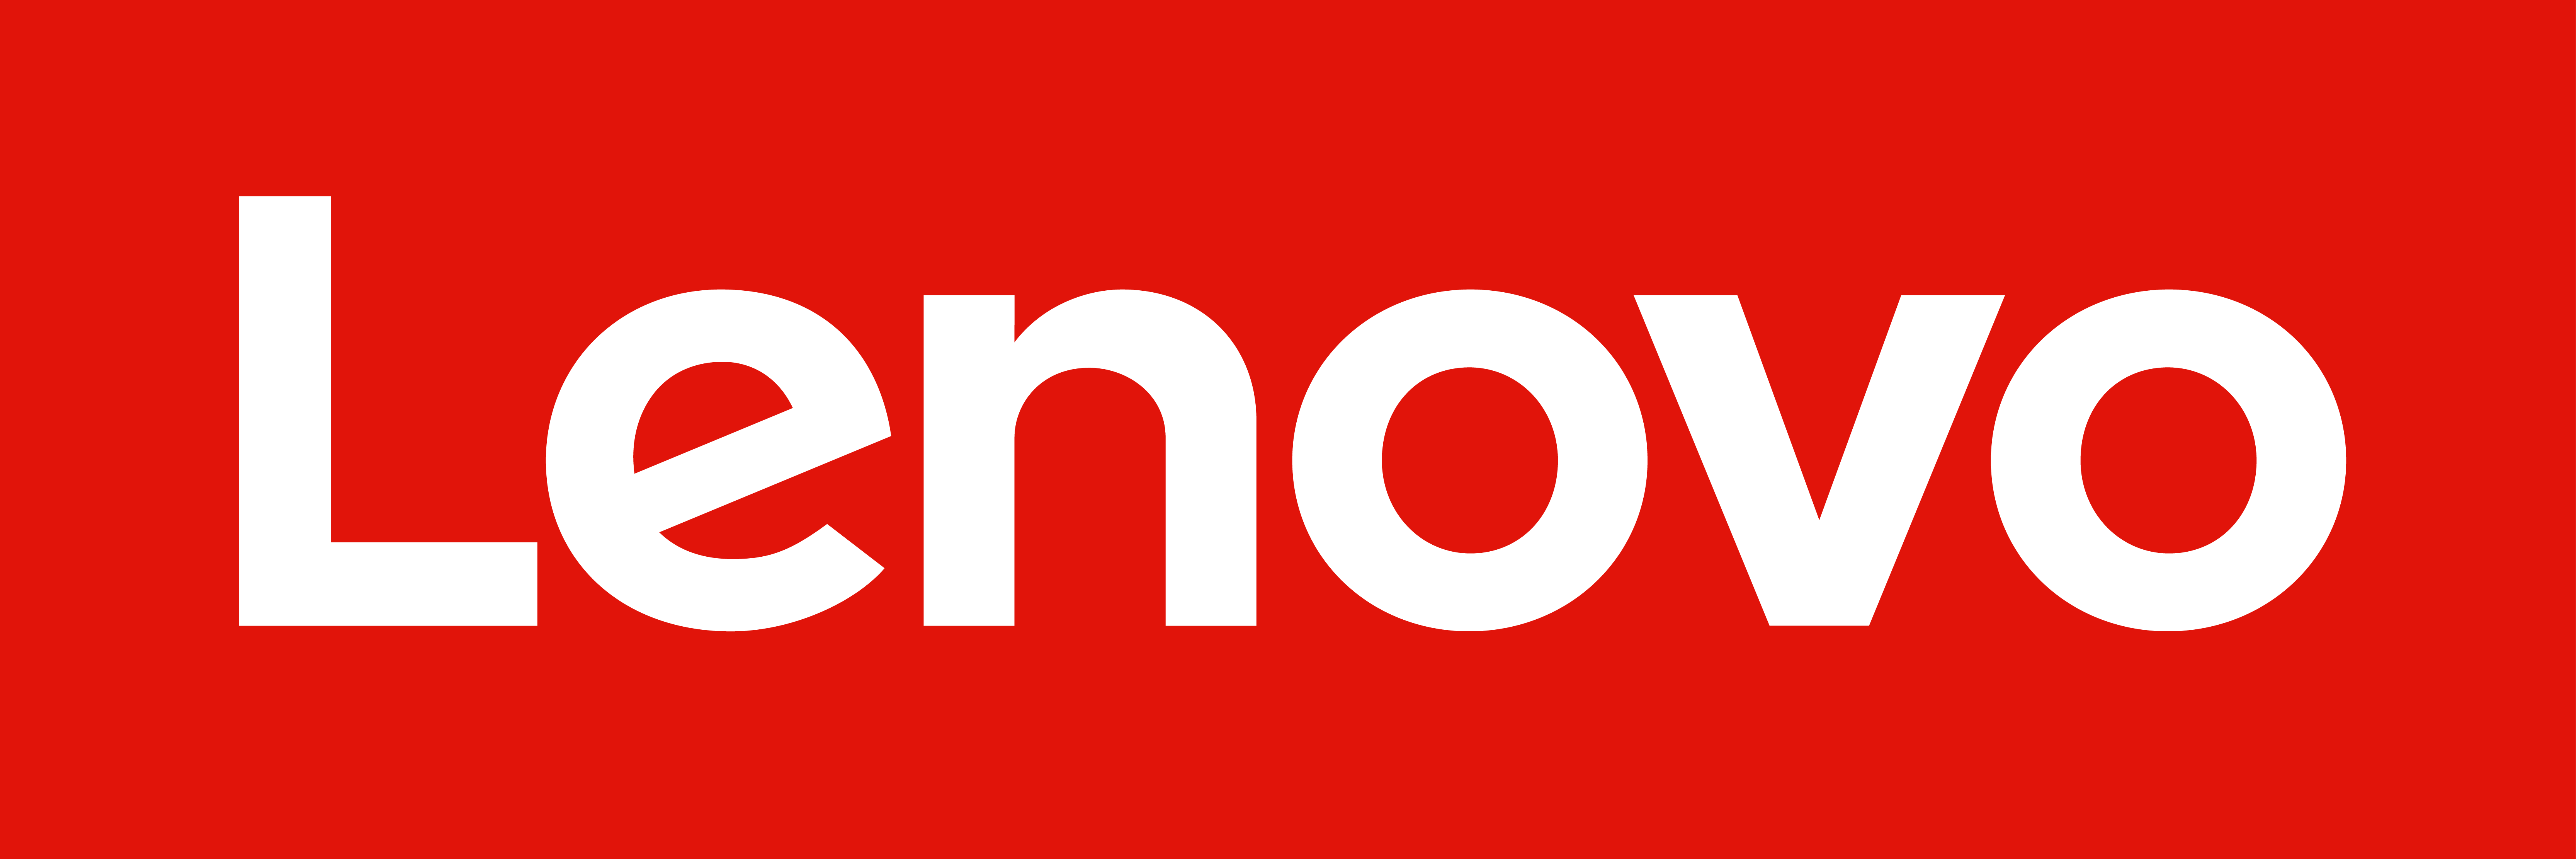 red lenovo logo